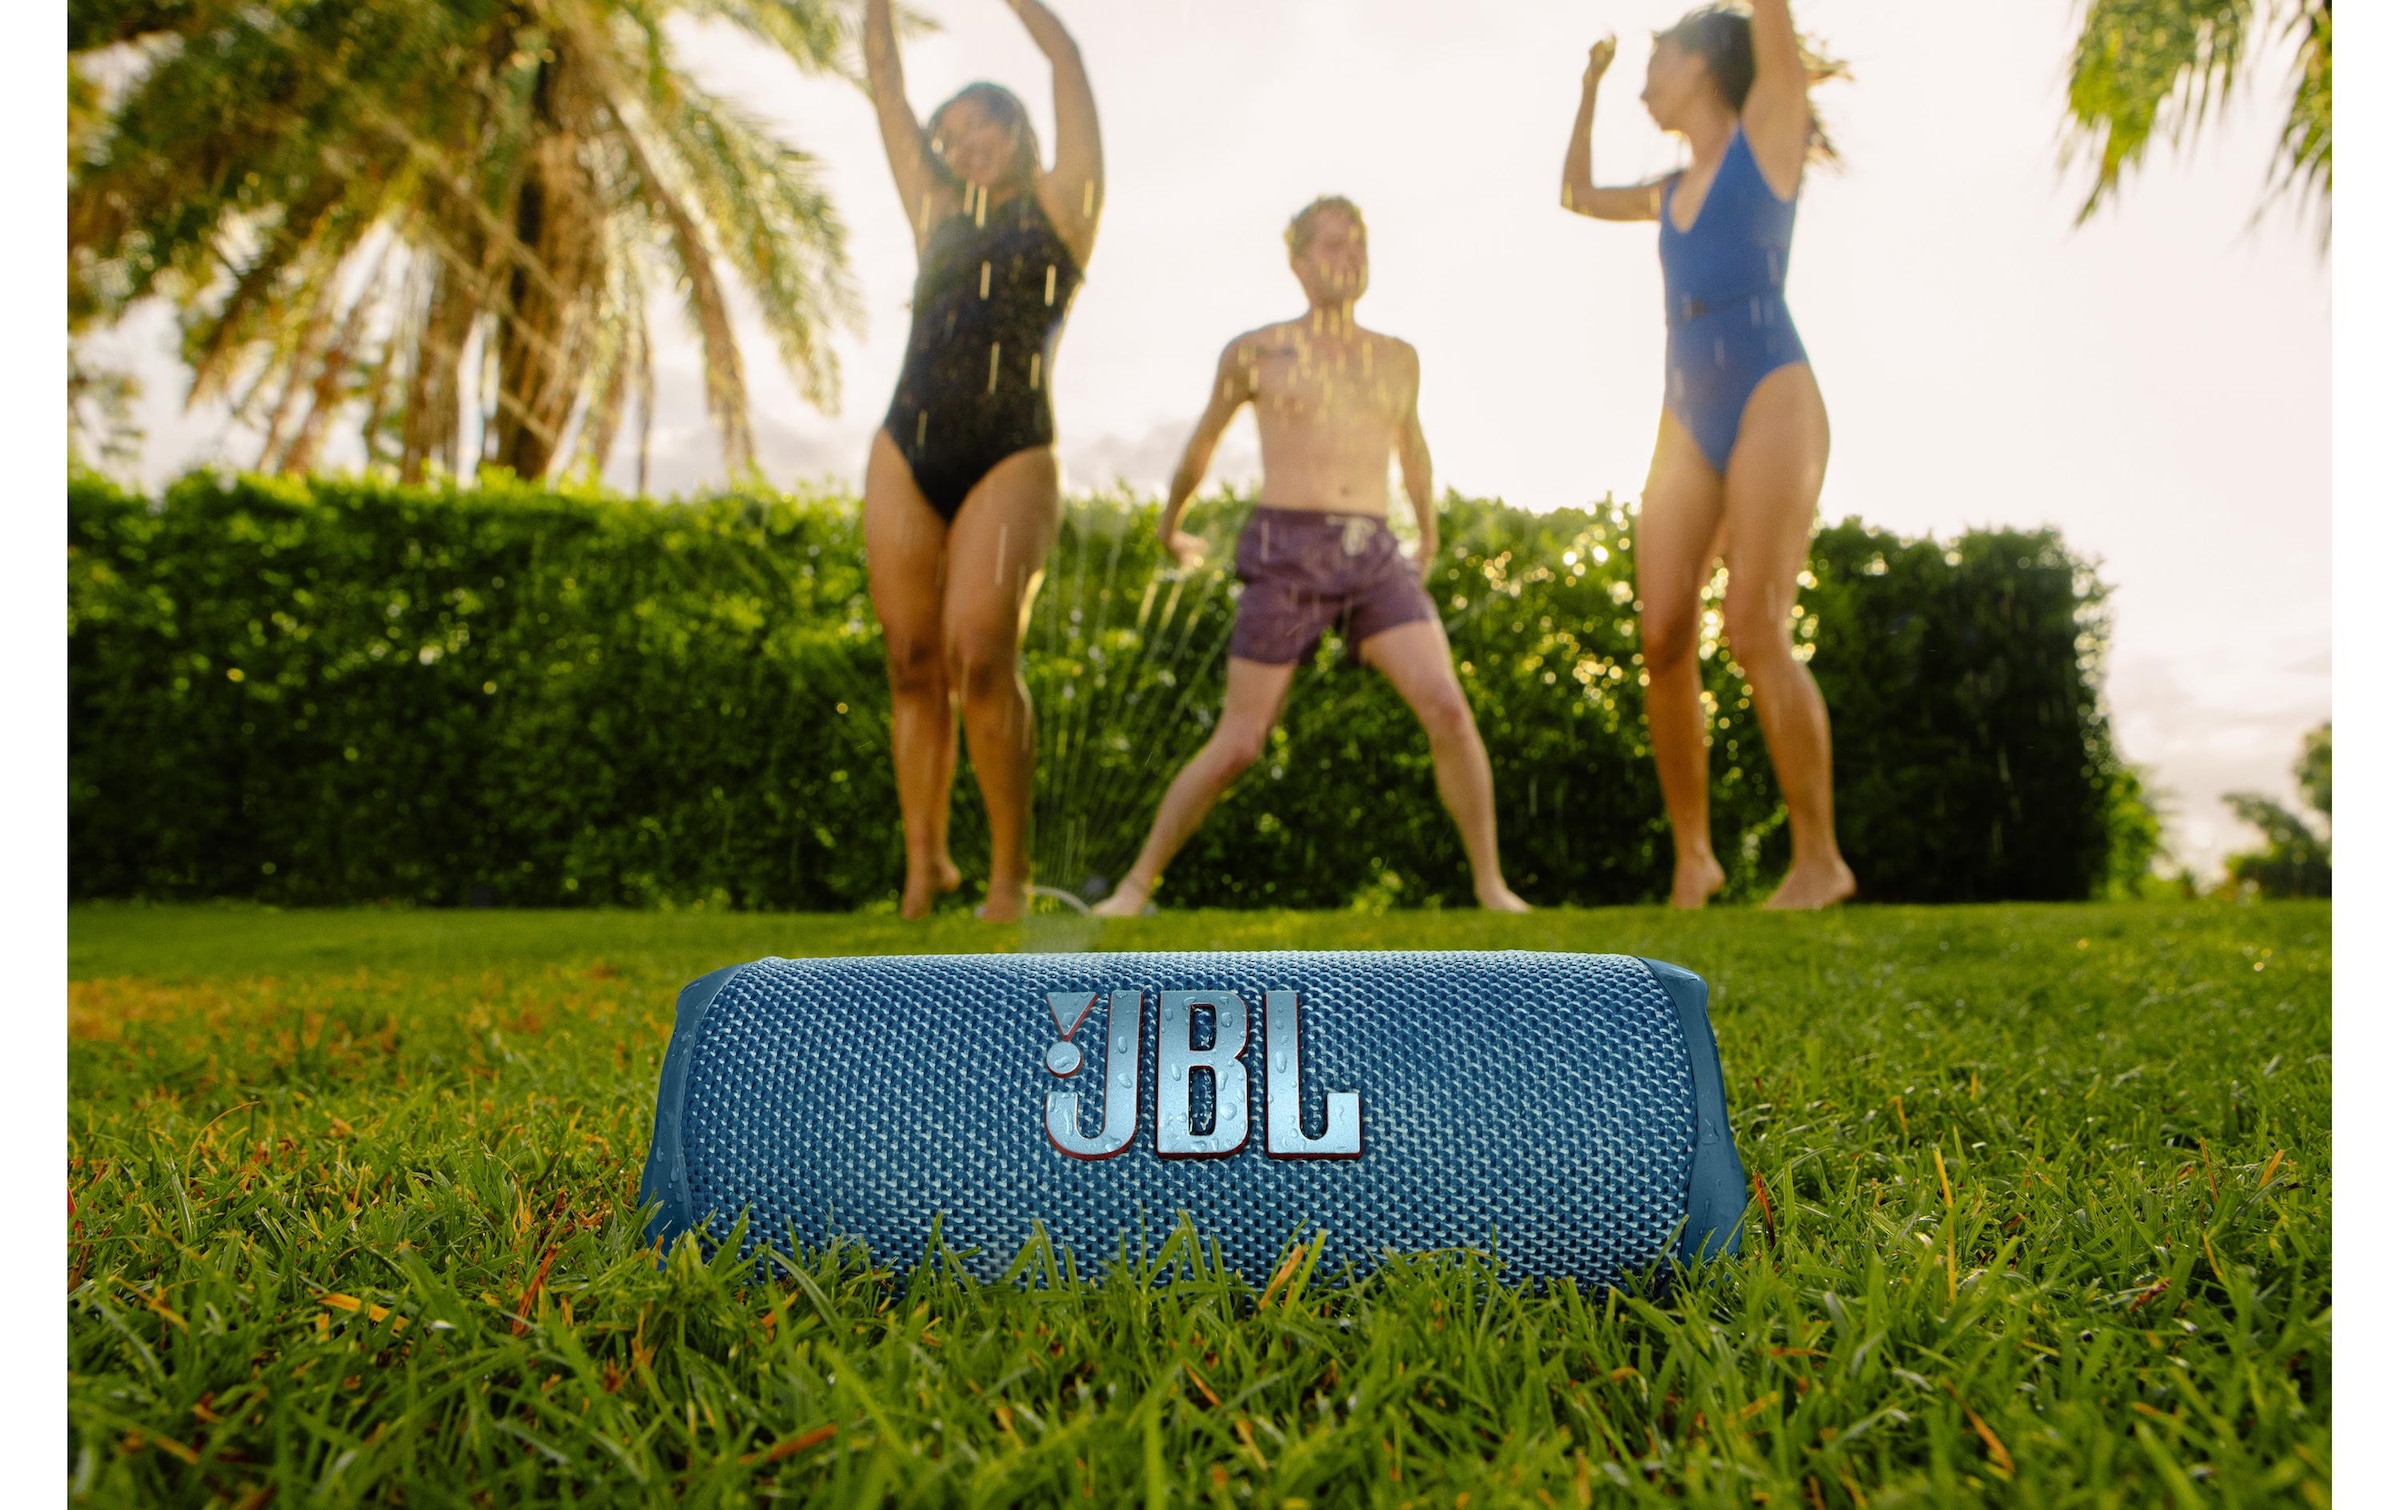 JBL Bluetooth-Speaker »Speaker Flip 6 Blau«